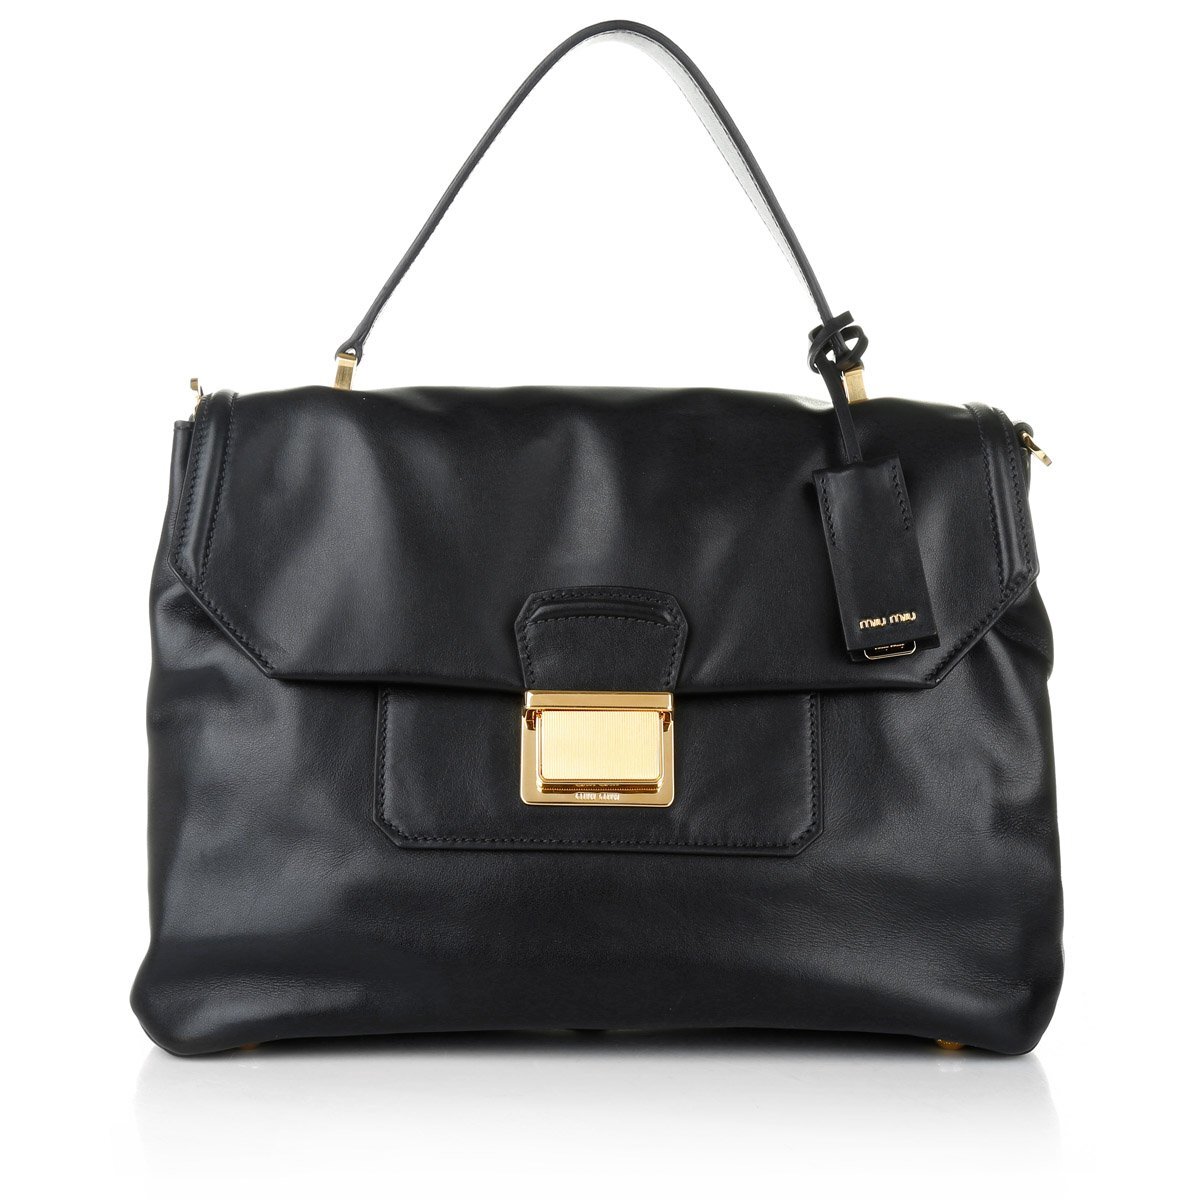 Miu Miu Vitello Soft Top Handle Bag in Black.jpg